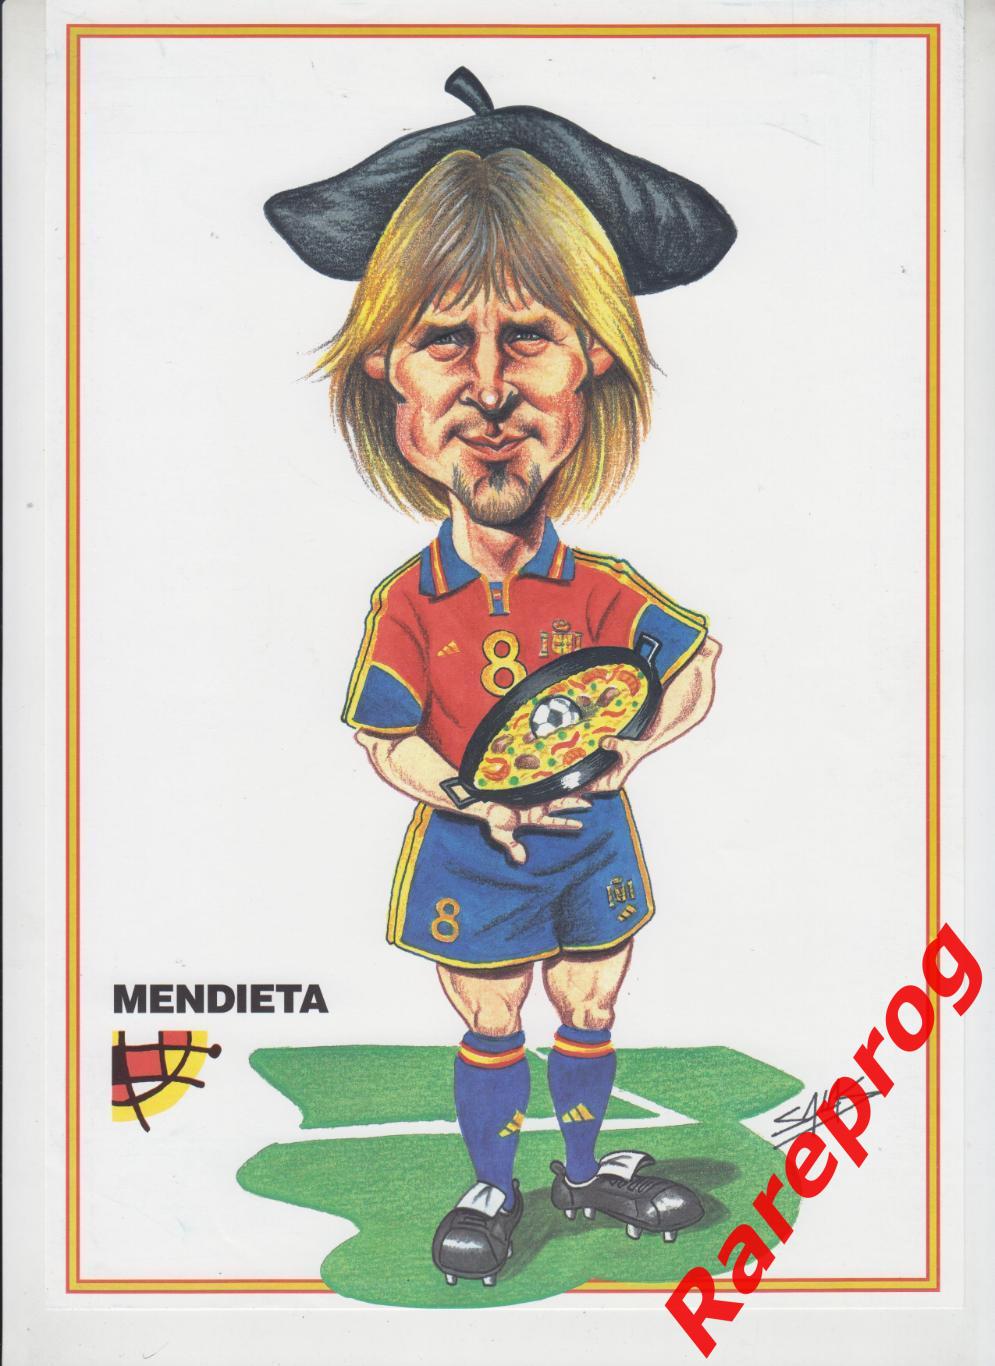 журнал Футбол RFEF Испания № 29 ноябрь 2000 - постер Mendieta 1